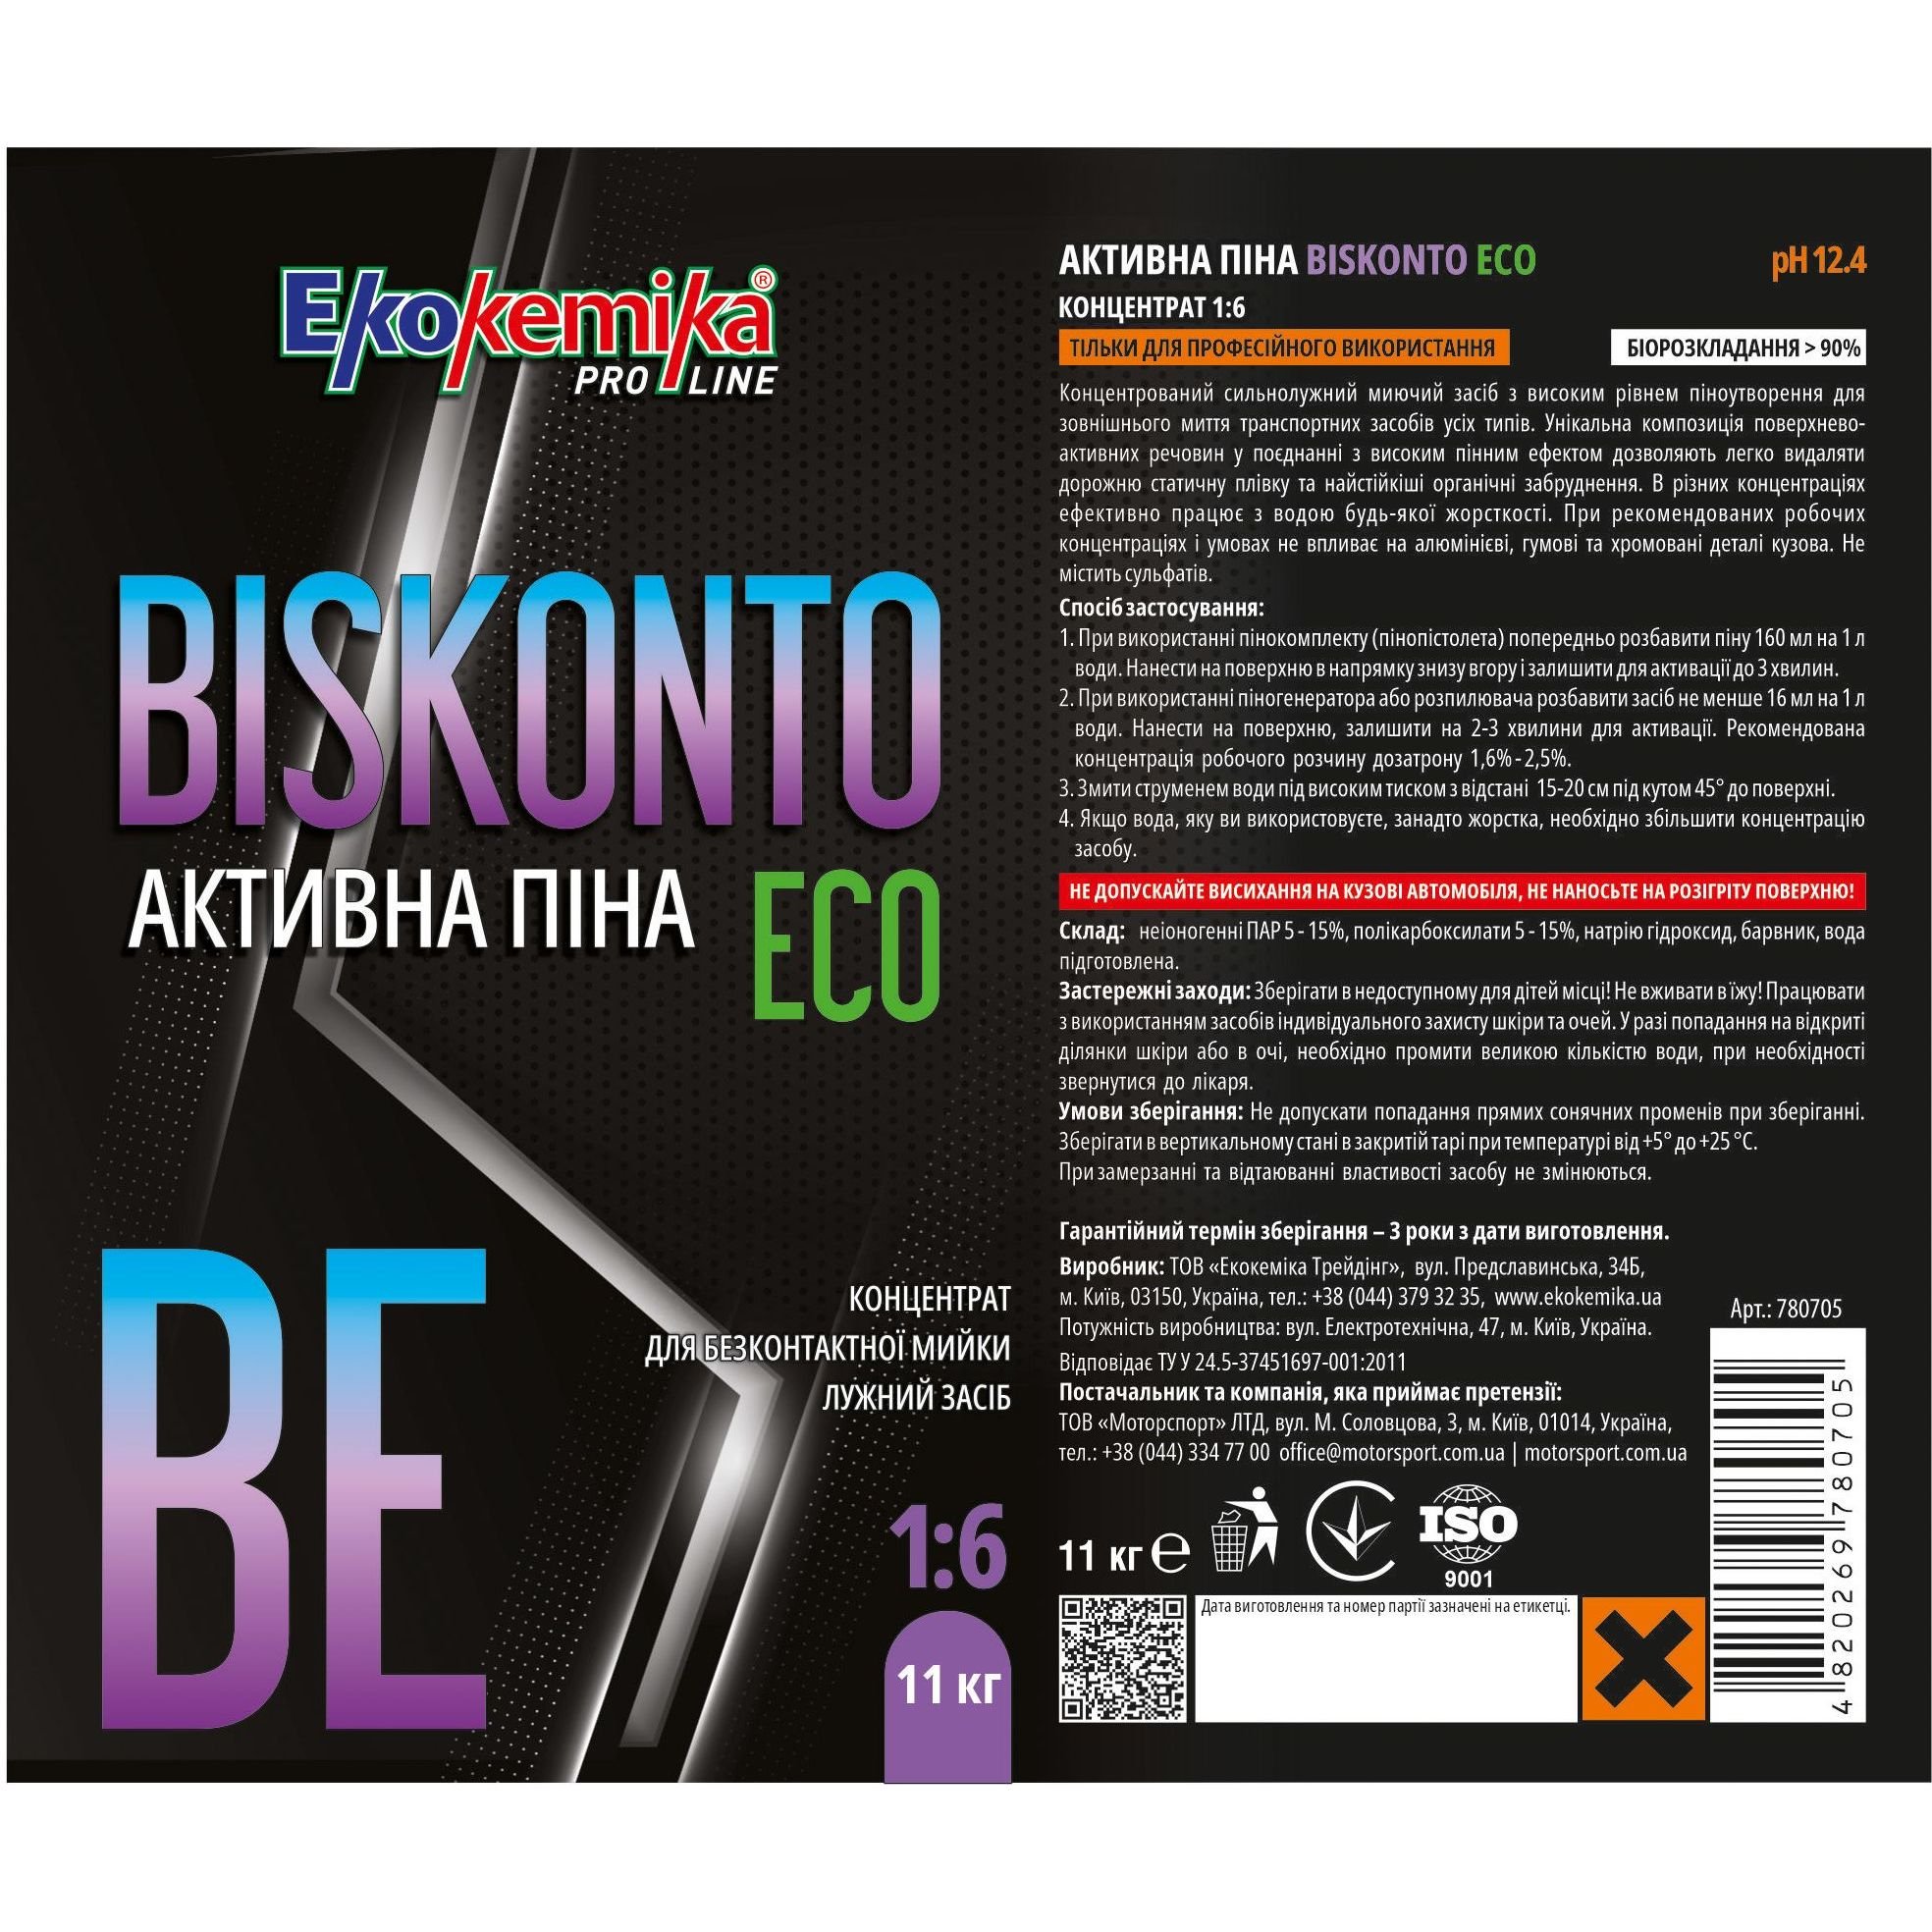 Активная пена Ekokemika Pro Line Biskonto Eco 1:6, 11 кг (780705) - фото 2